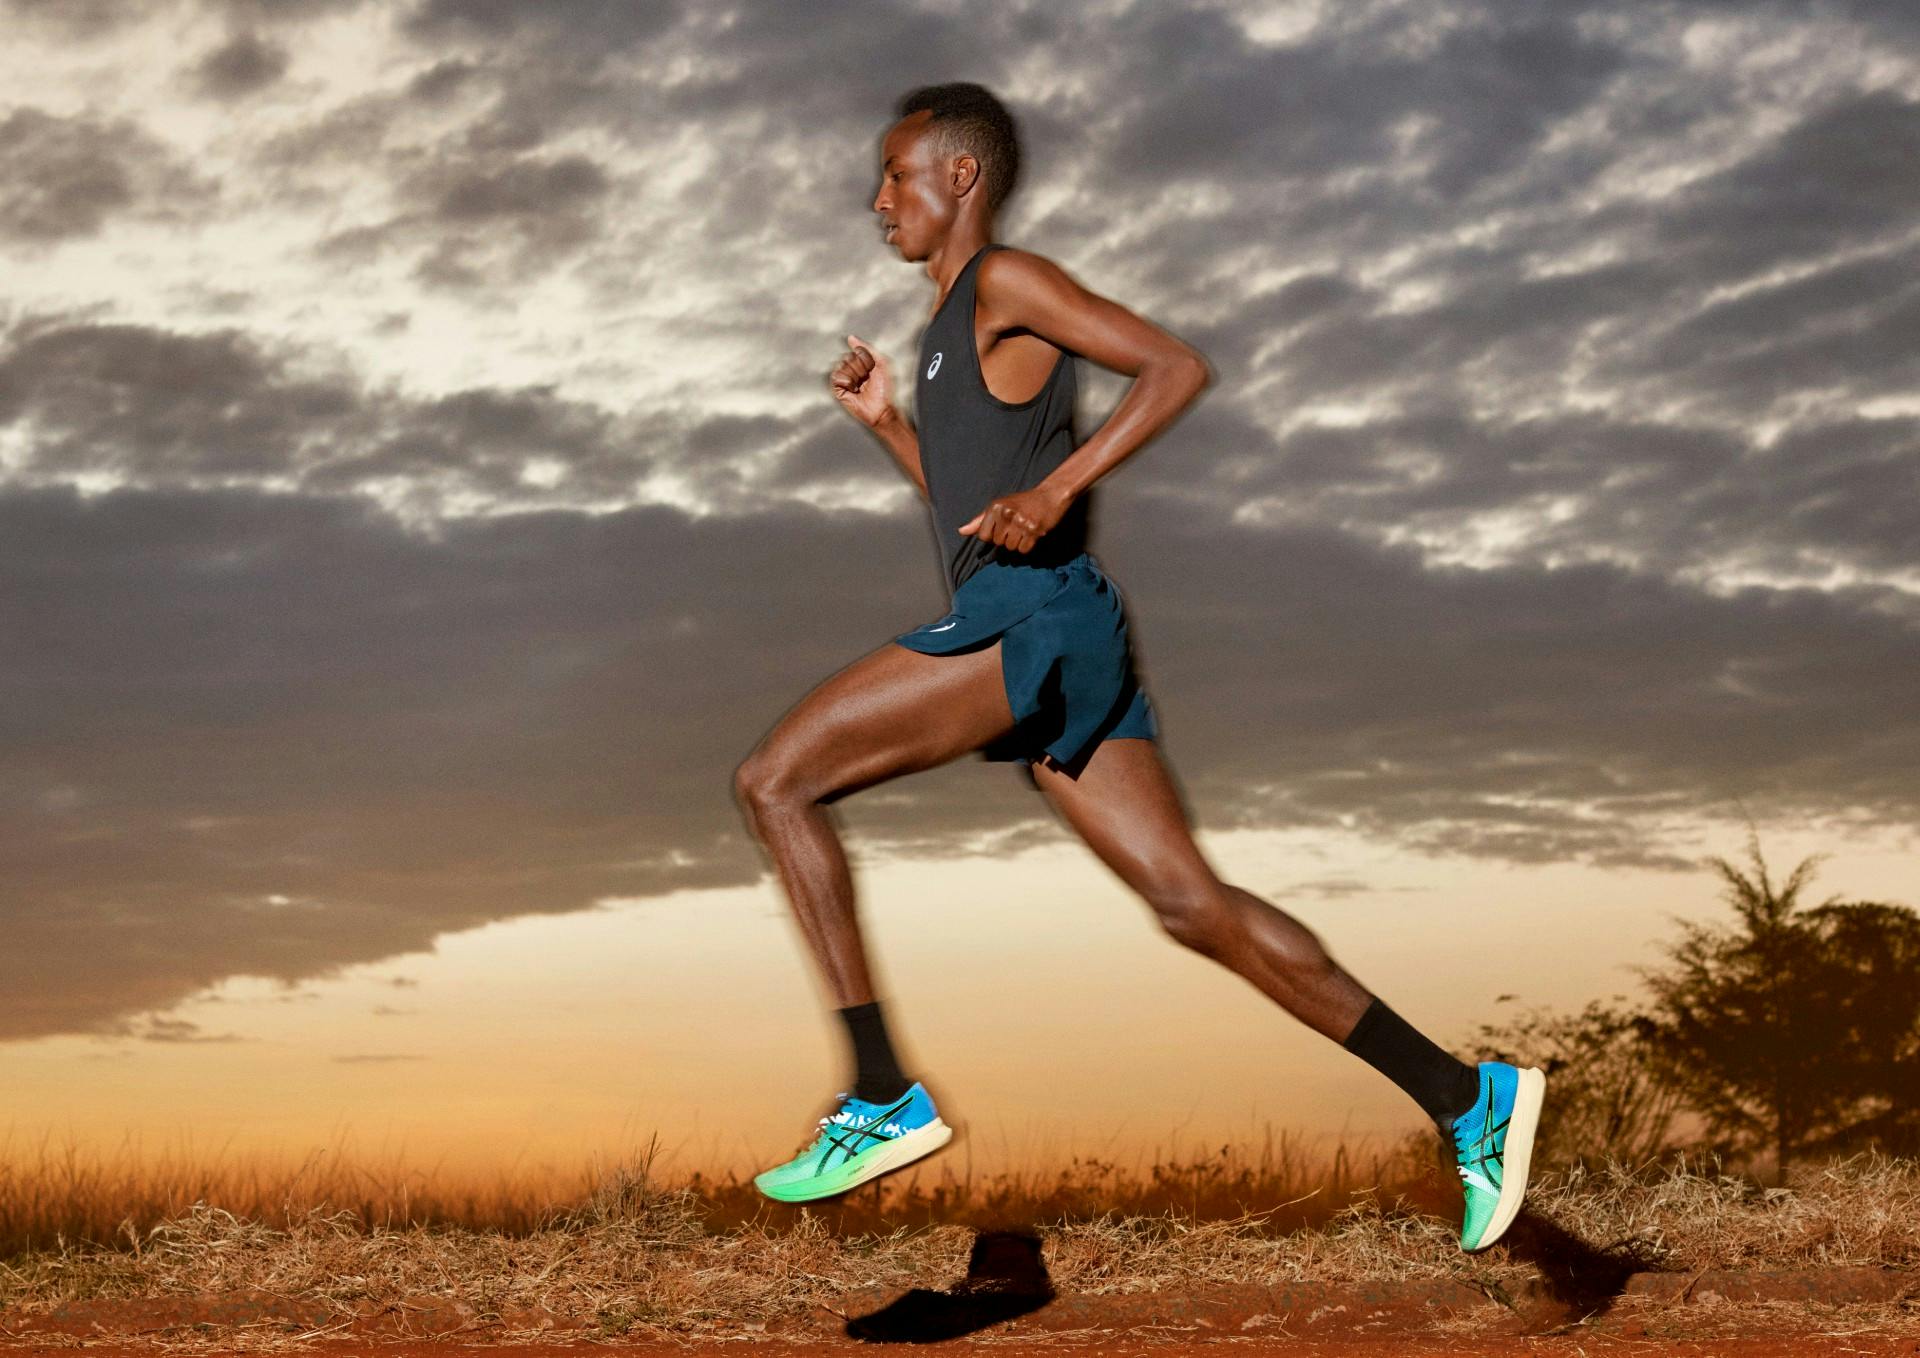 Men's ASICS Magic Speed 2 Running Shoe - Road Runner Sports